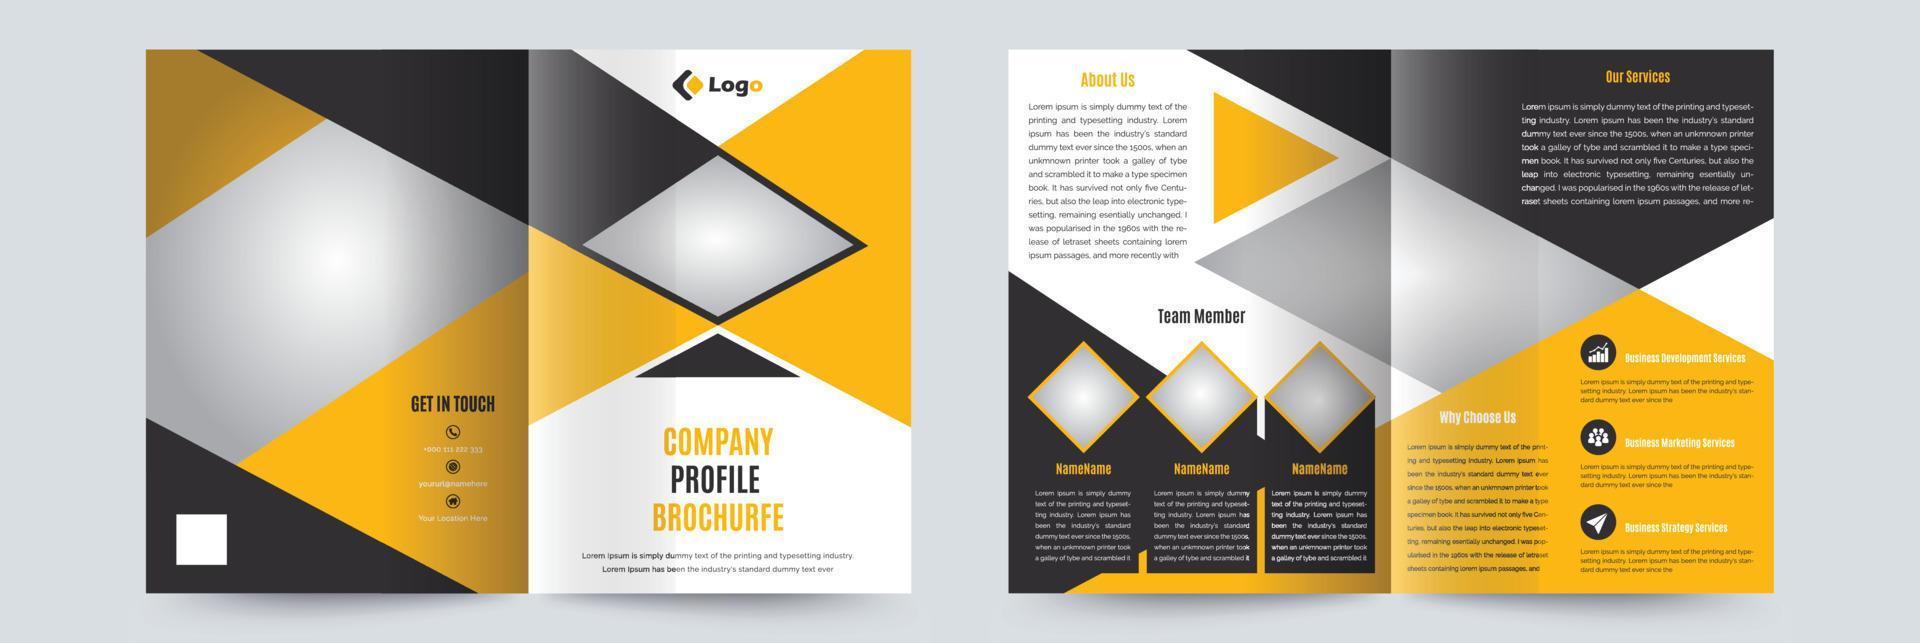 modelo de design de brochura de perfil de empresa laranja preto adepto de projetos multiuso vetor